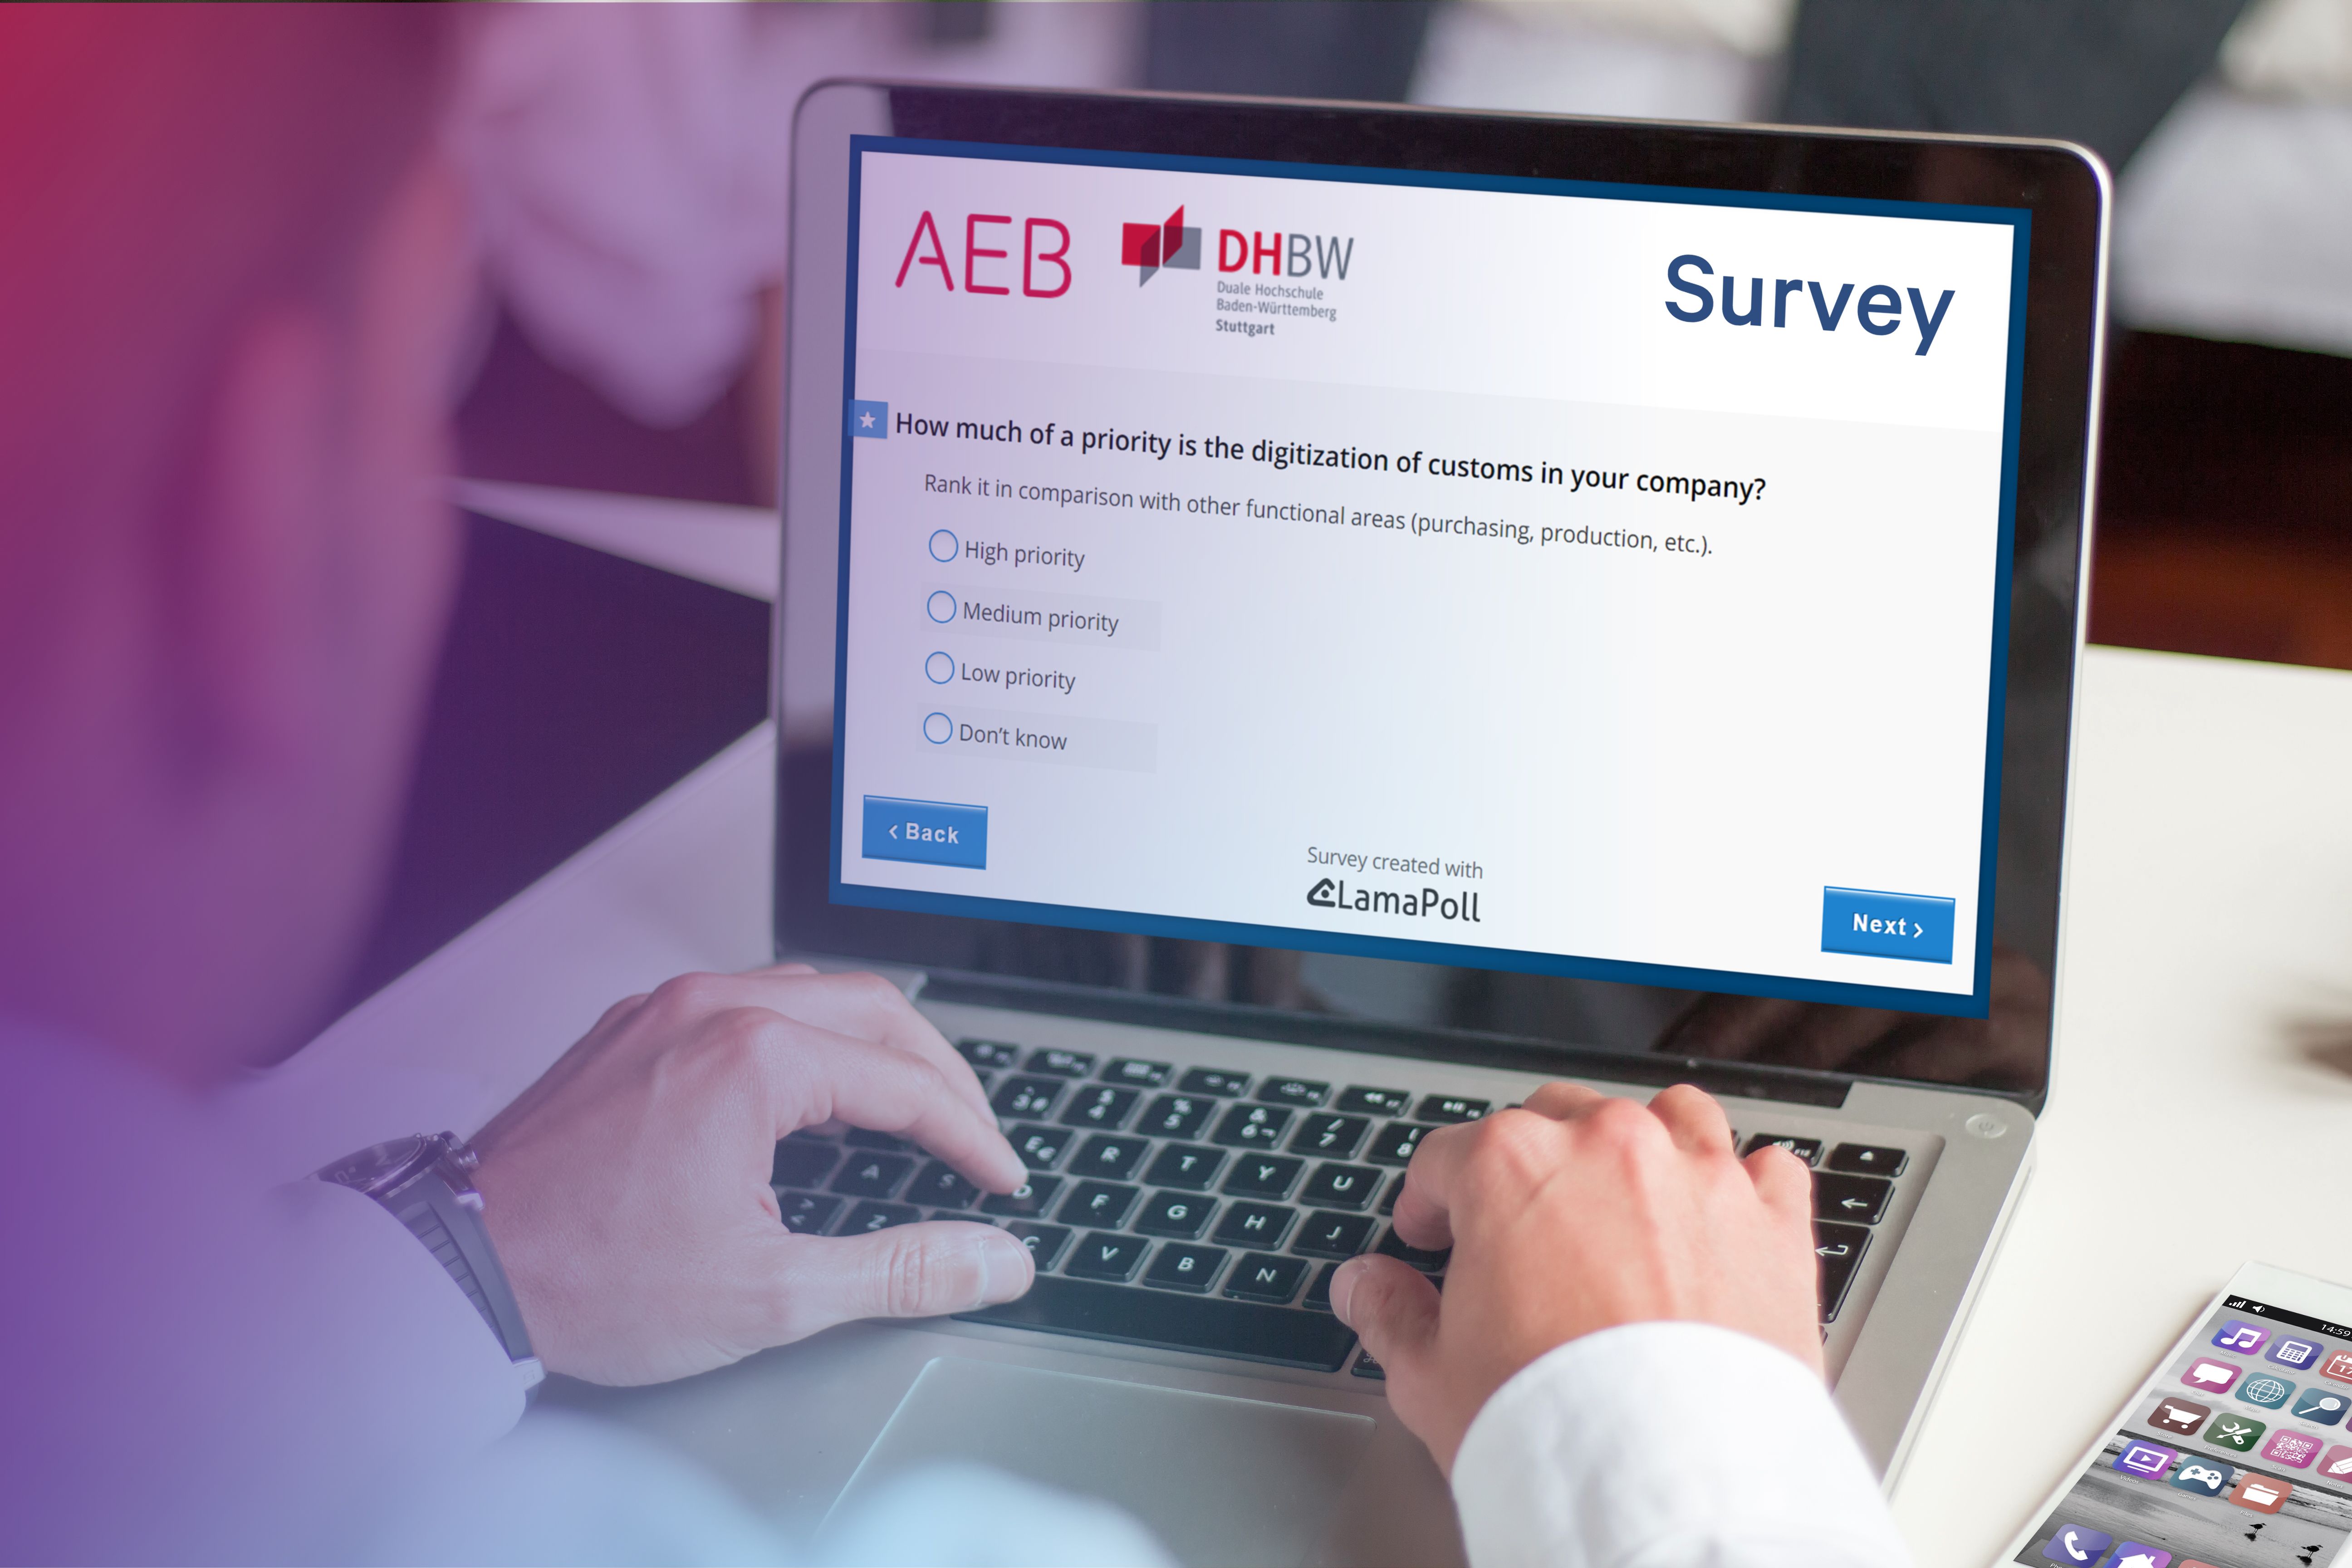 AEB DHBW online survey